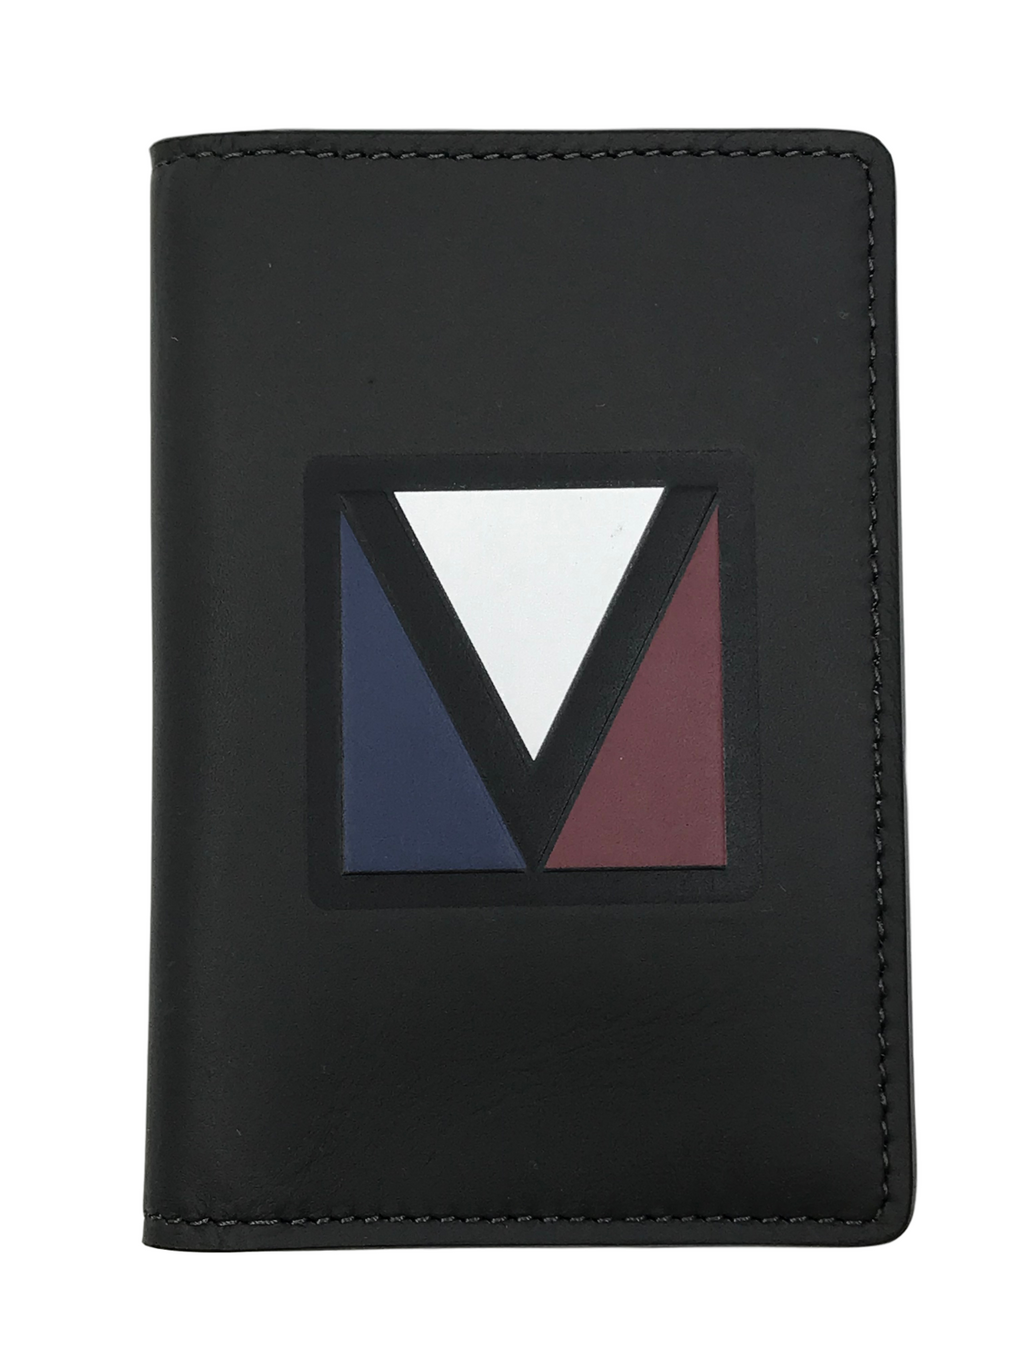 Louis Vuitton Pocket Organizer $335